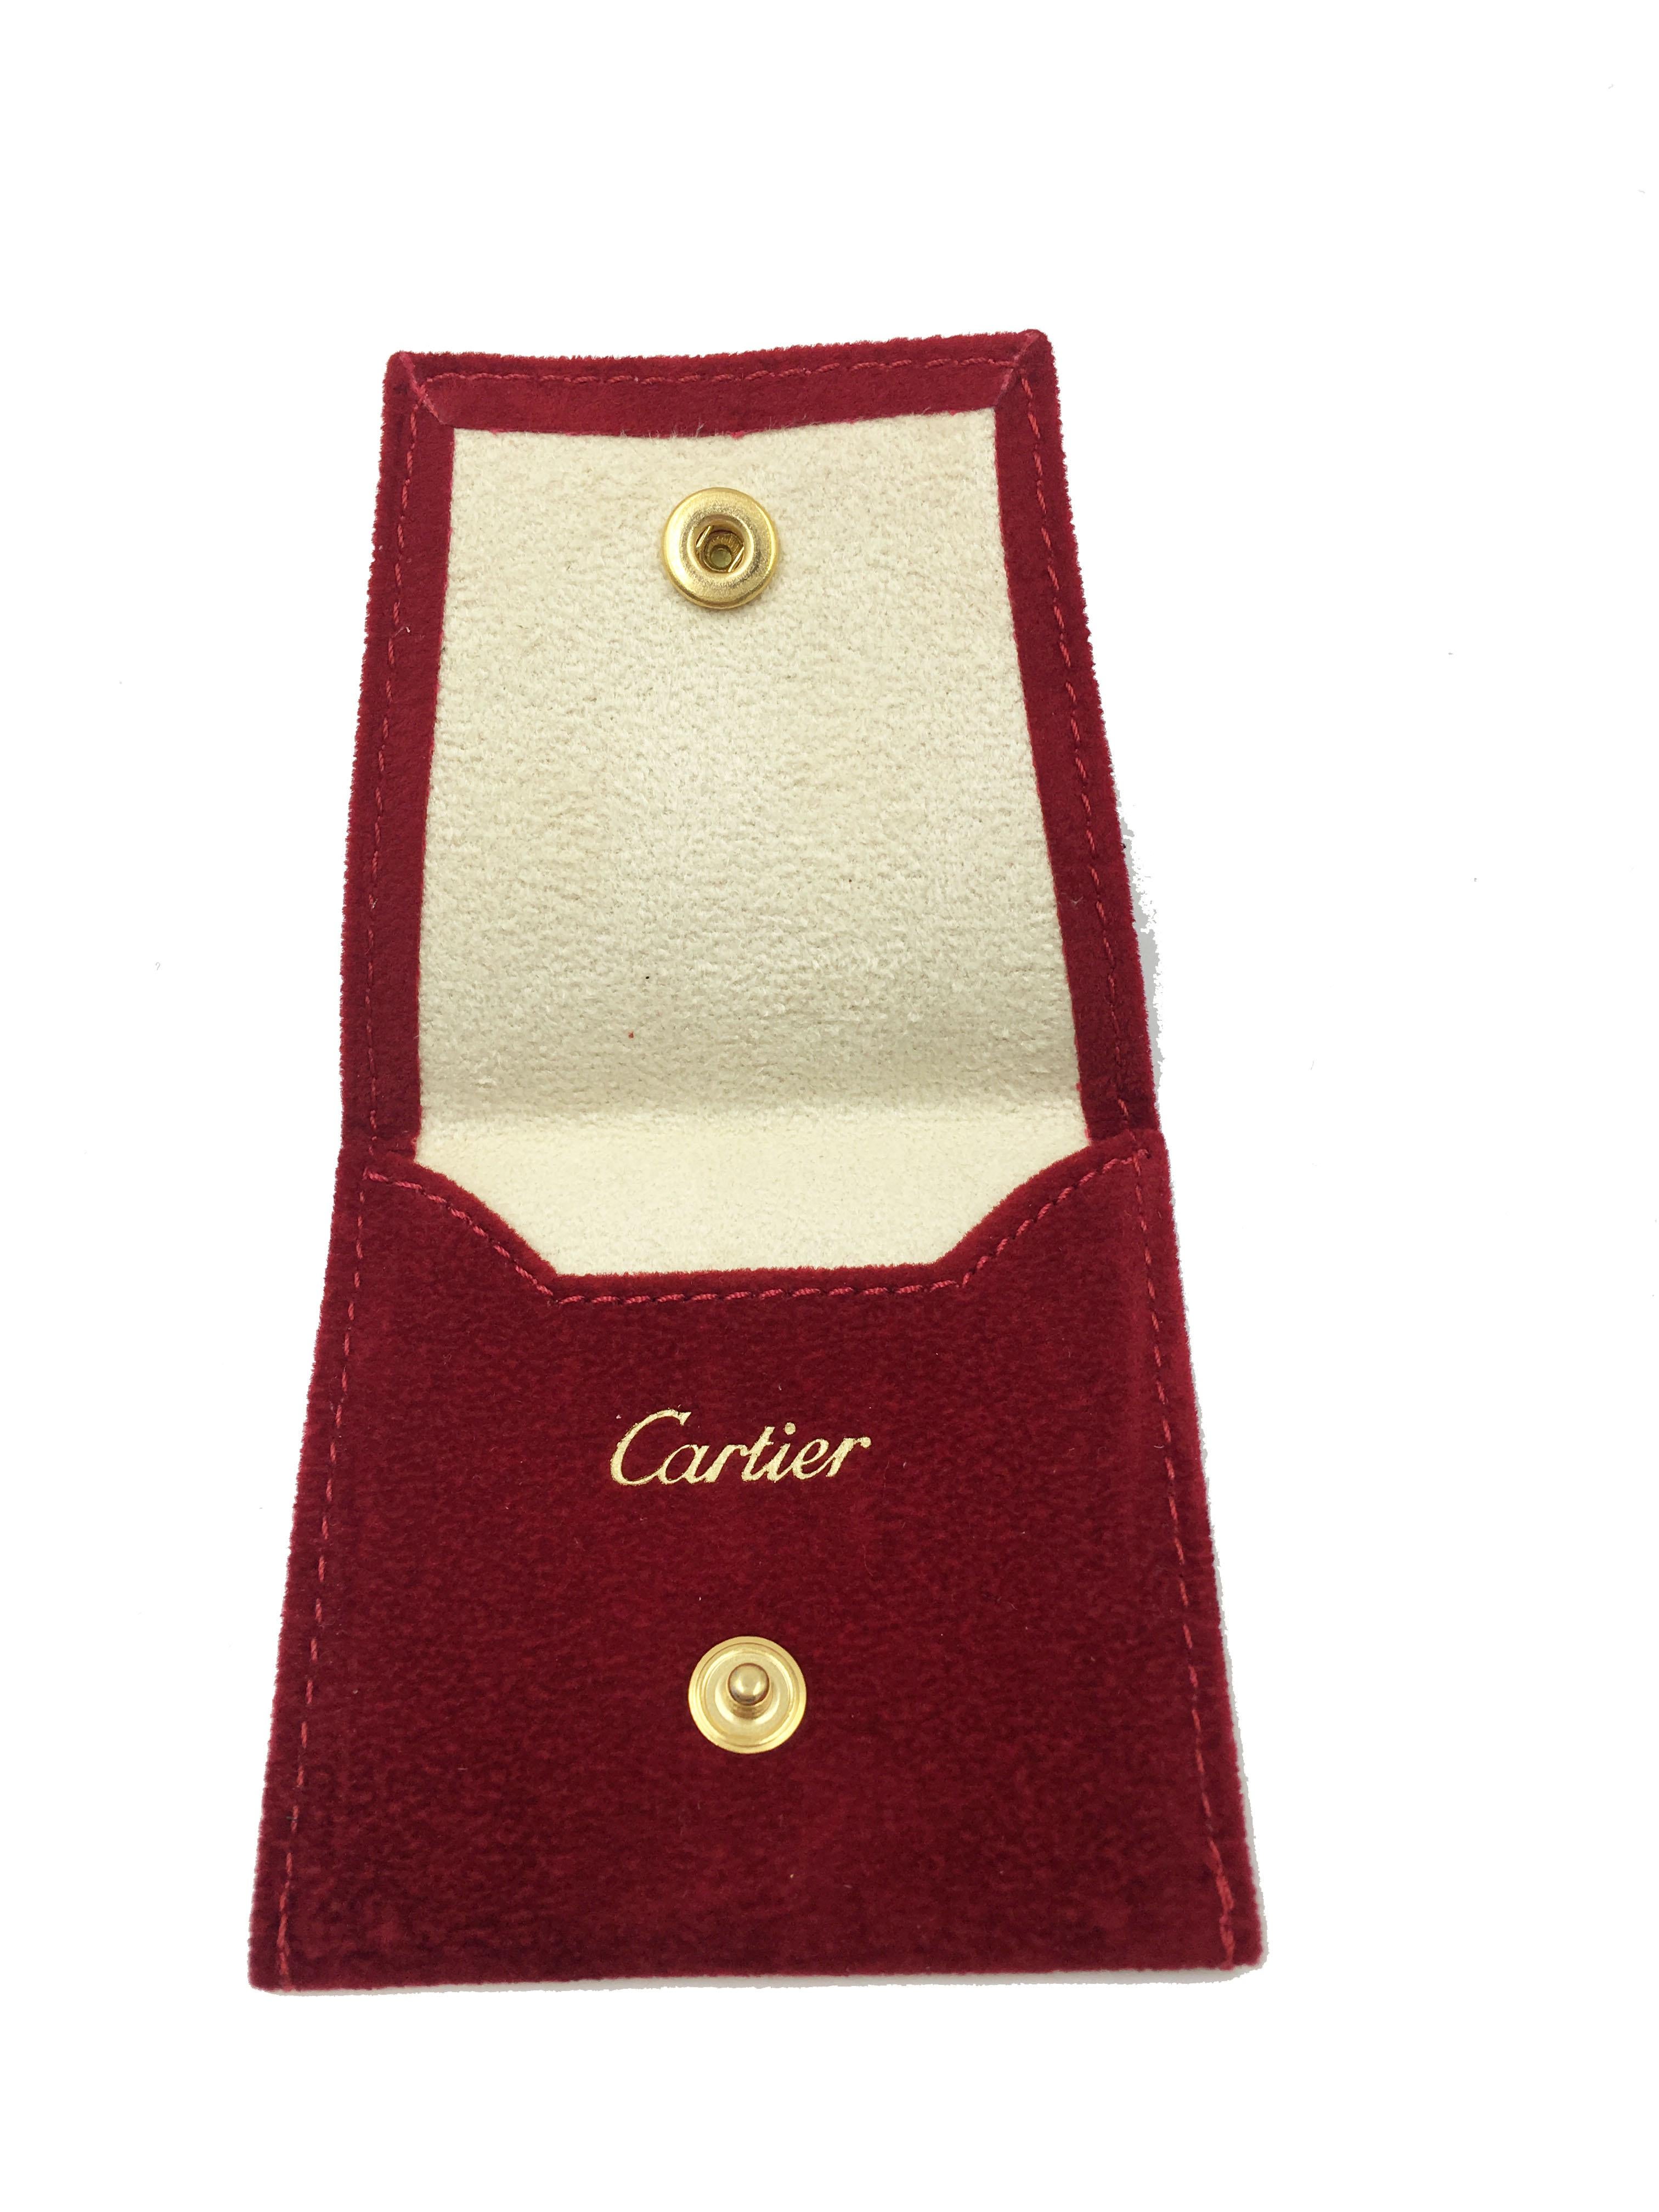 Cartier 18 Karat White Gold Love Ring For Sale 2